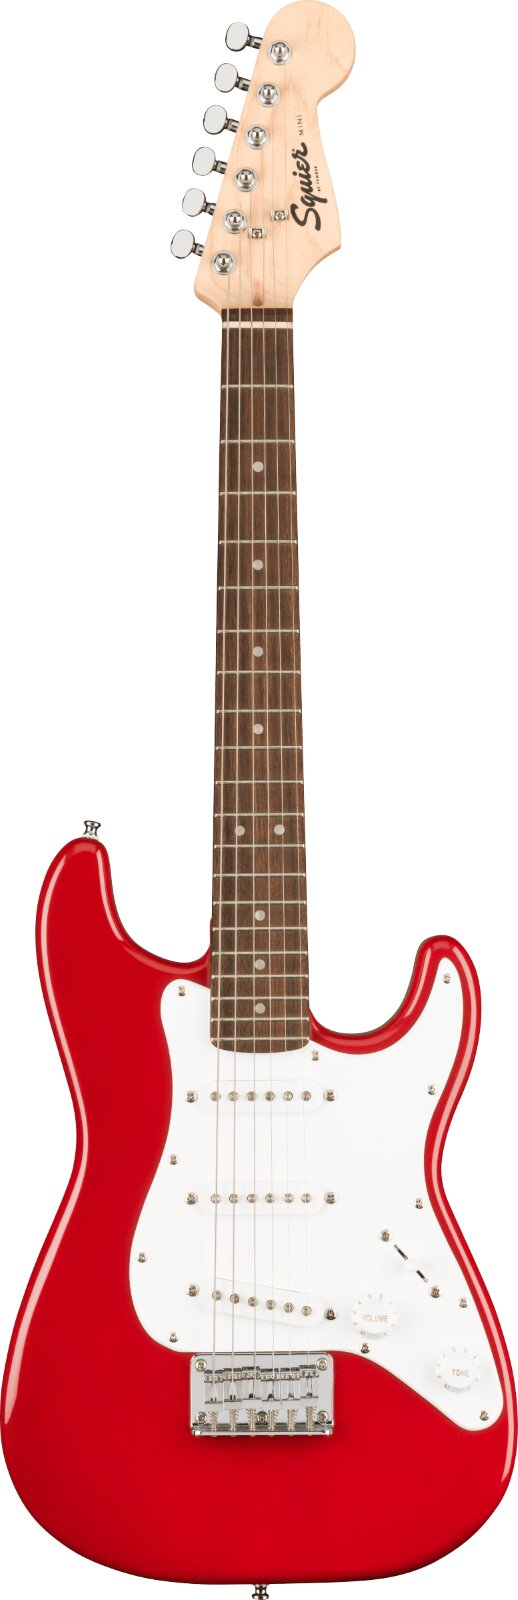 Squier Mini Stratocaster Laurel Fingerboard Dakota Red : photo 1